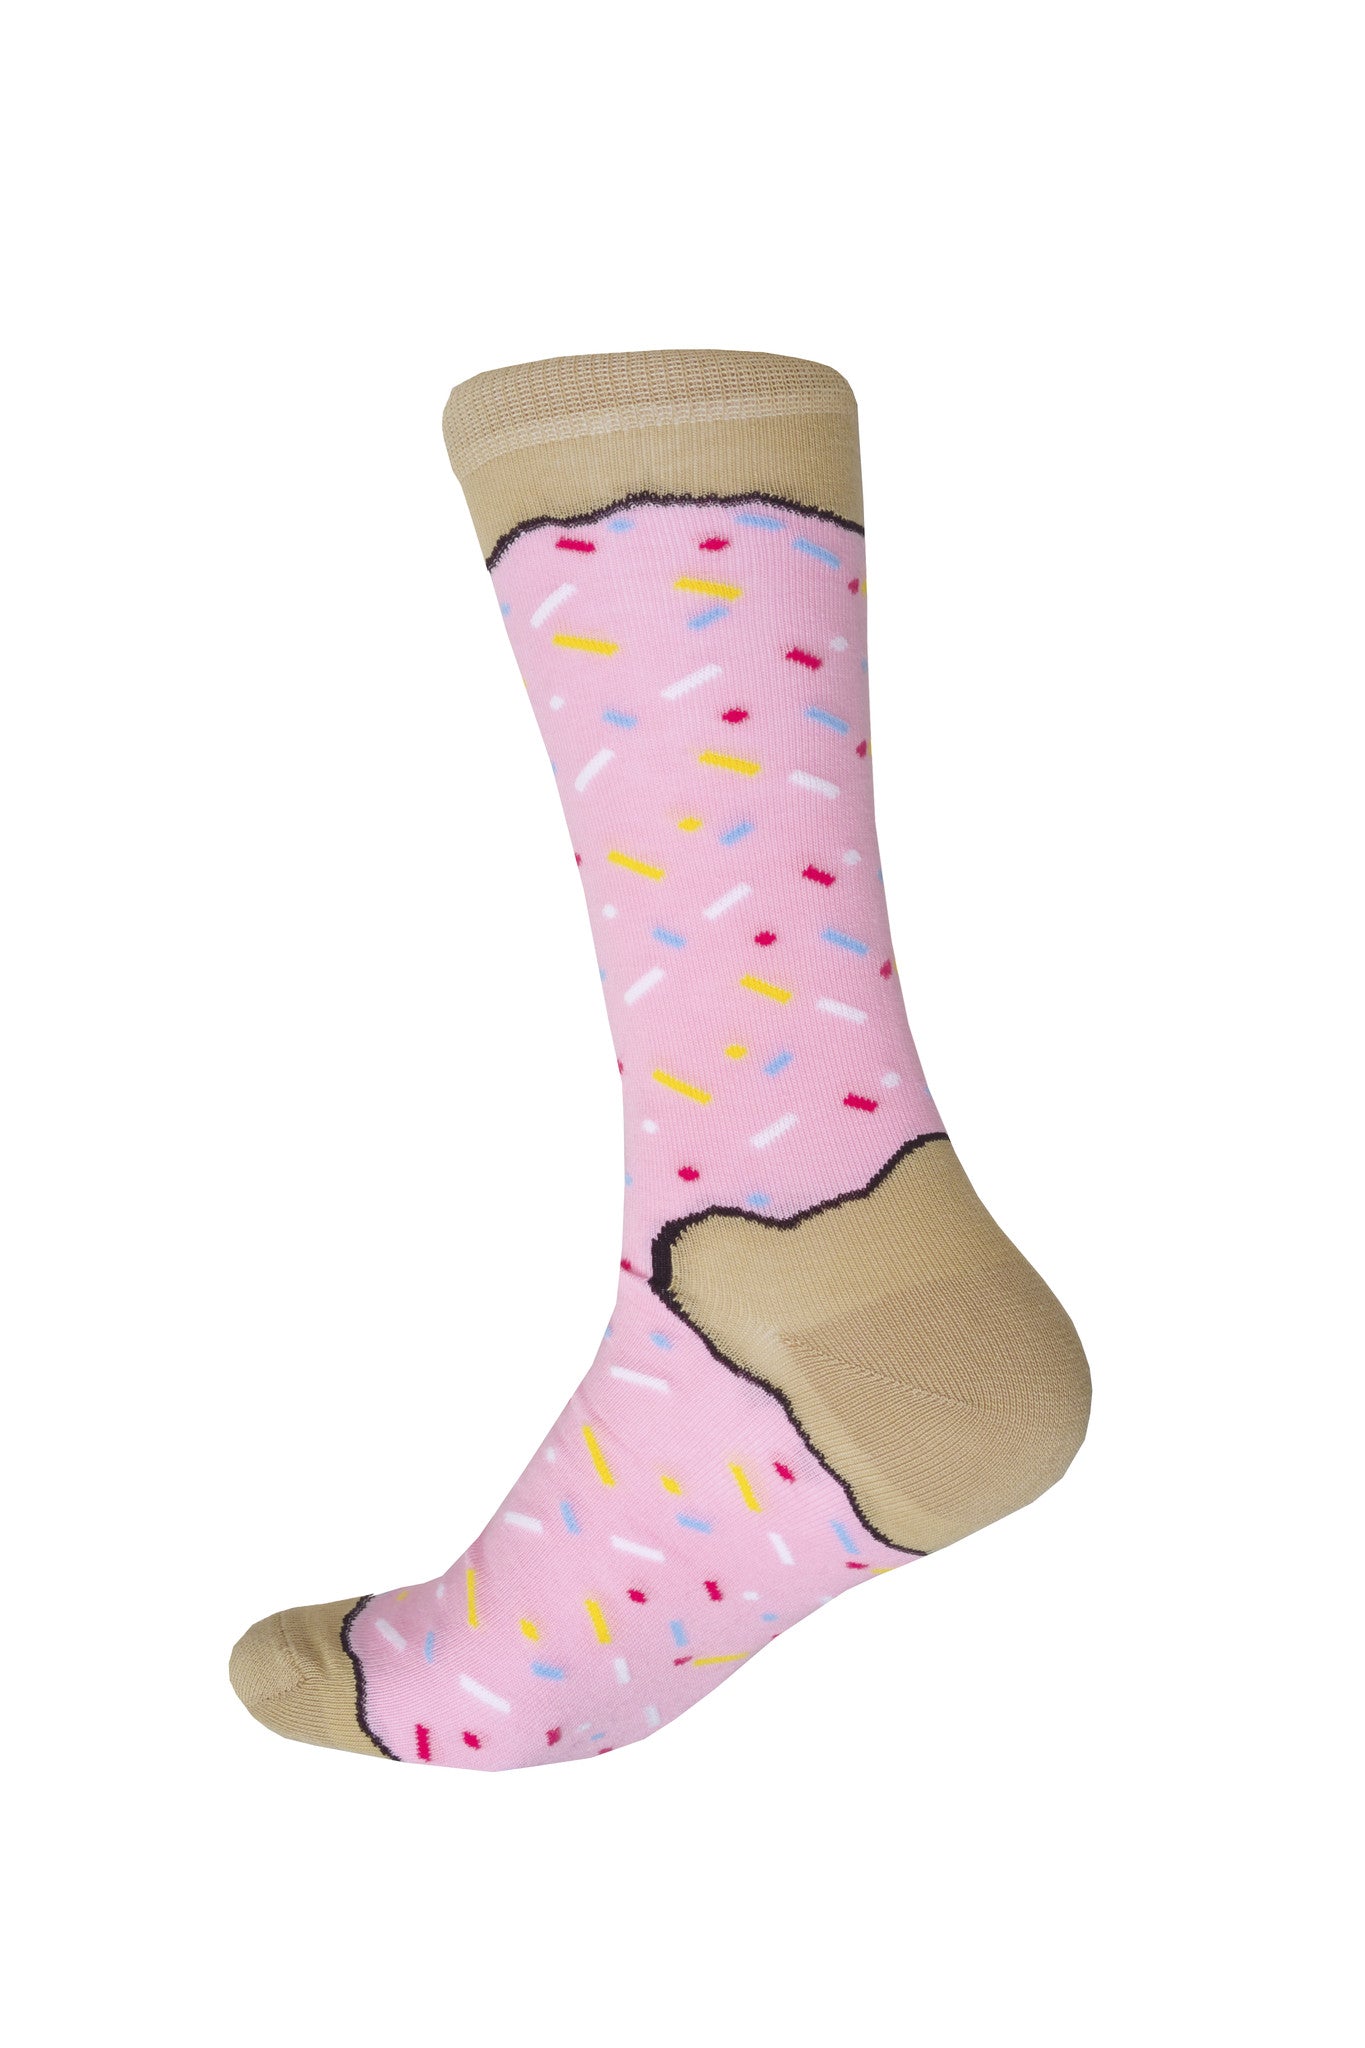 Giraffecool-giraffe-cool-brand-strawberry-donut-pink-light-cream-and-colour-sparkles-Mercerized-And-Brushed-Cotton-Fashion-Socks-Back